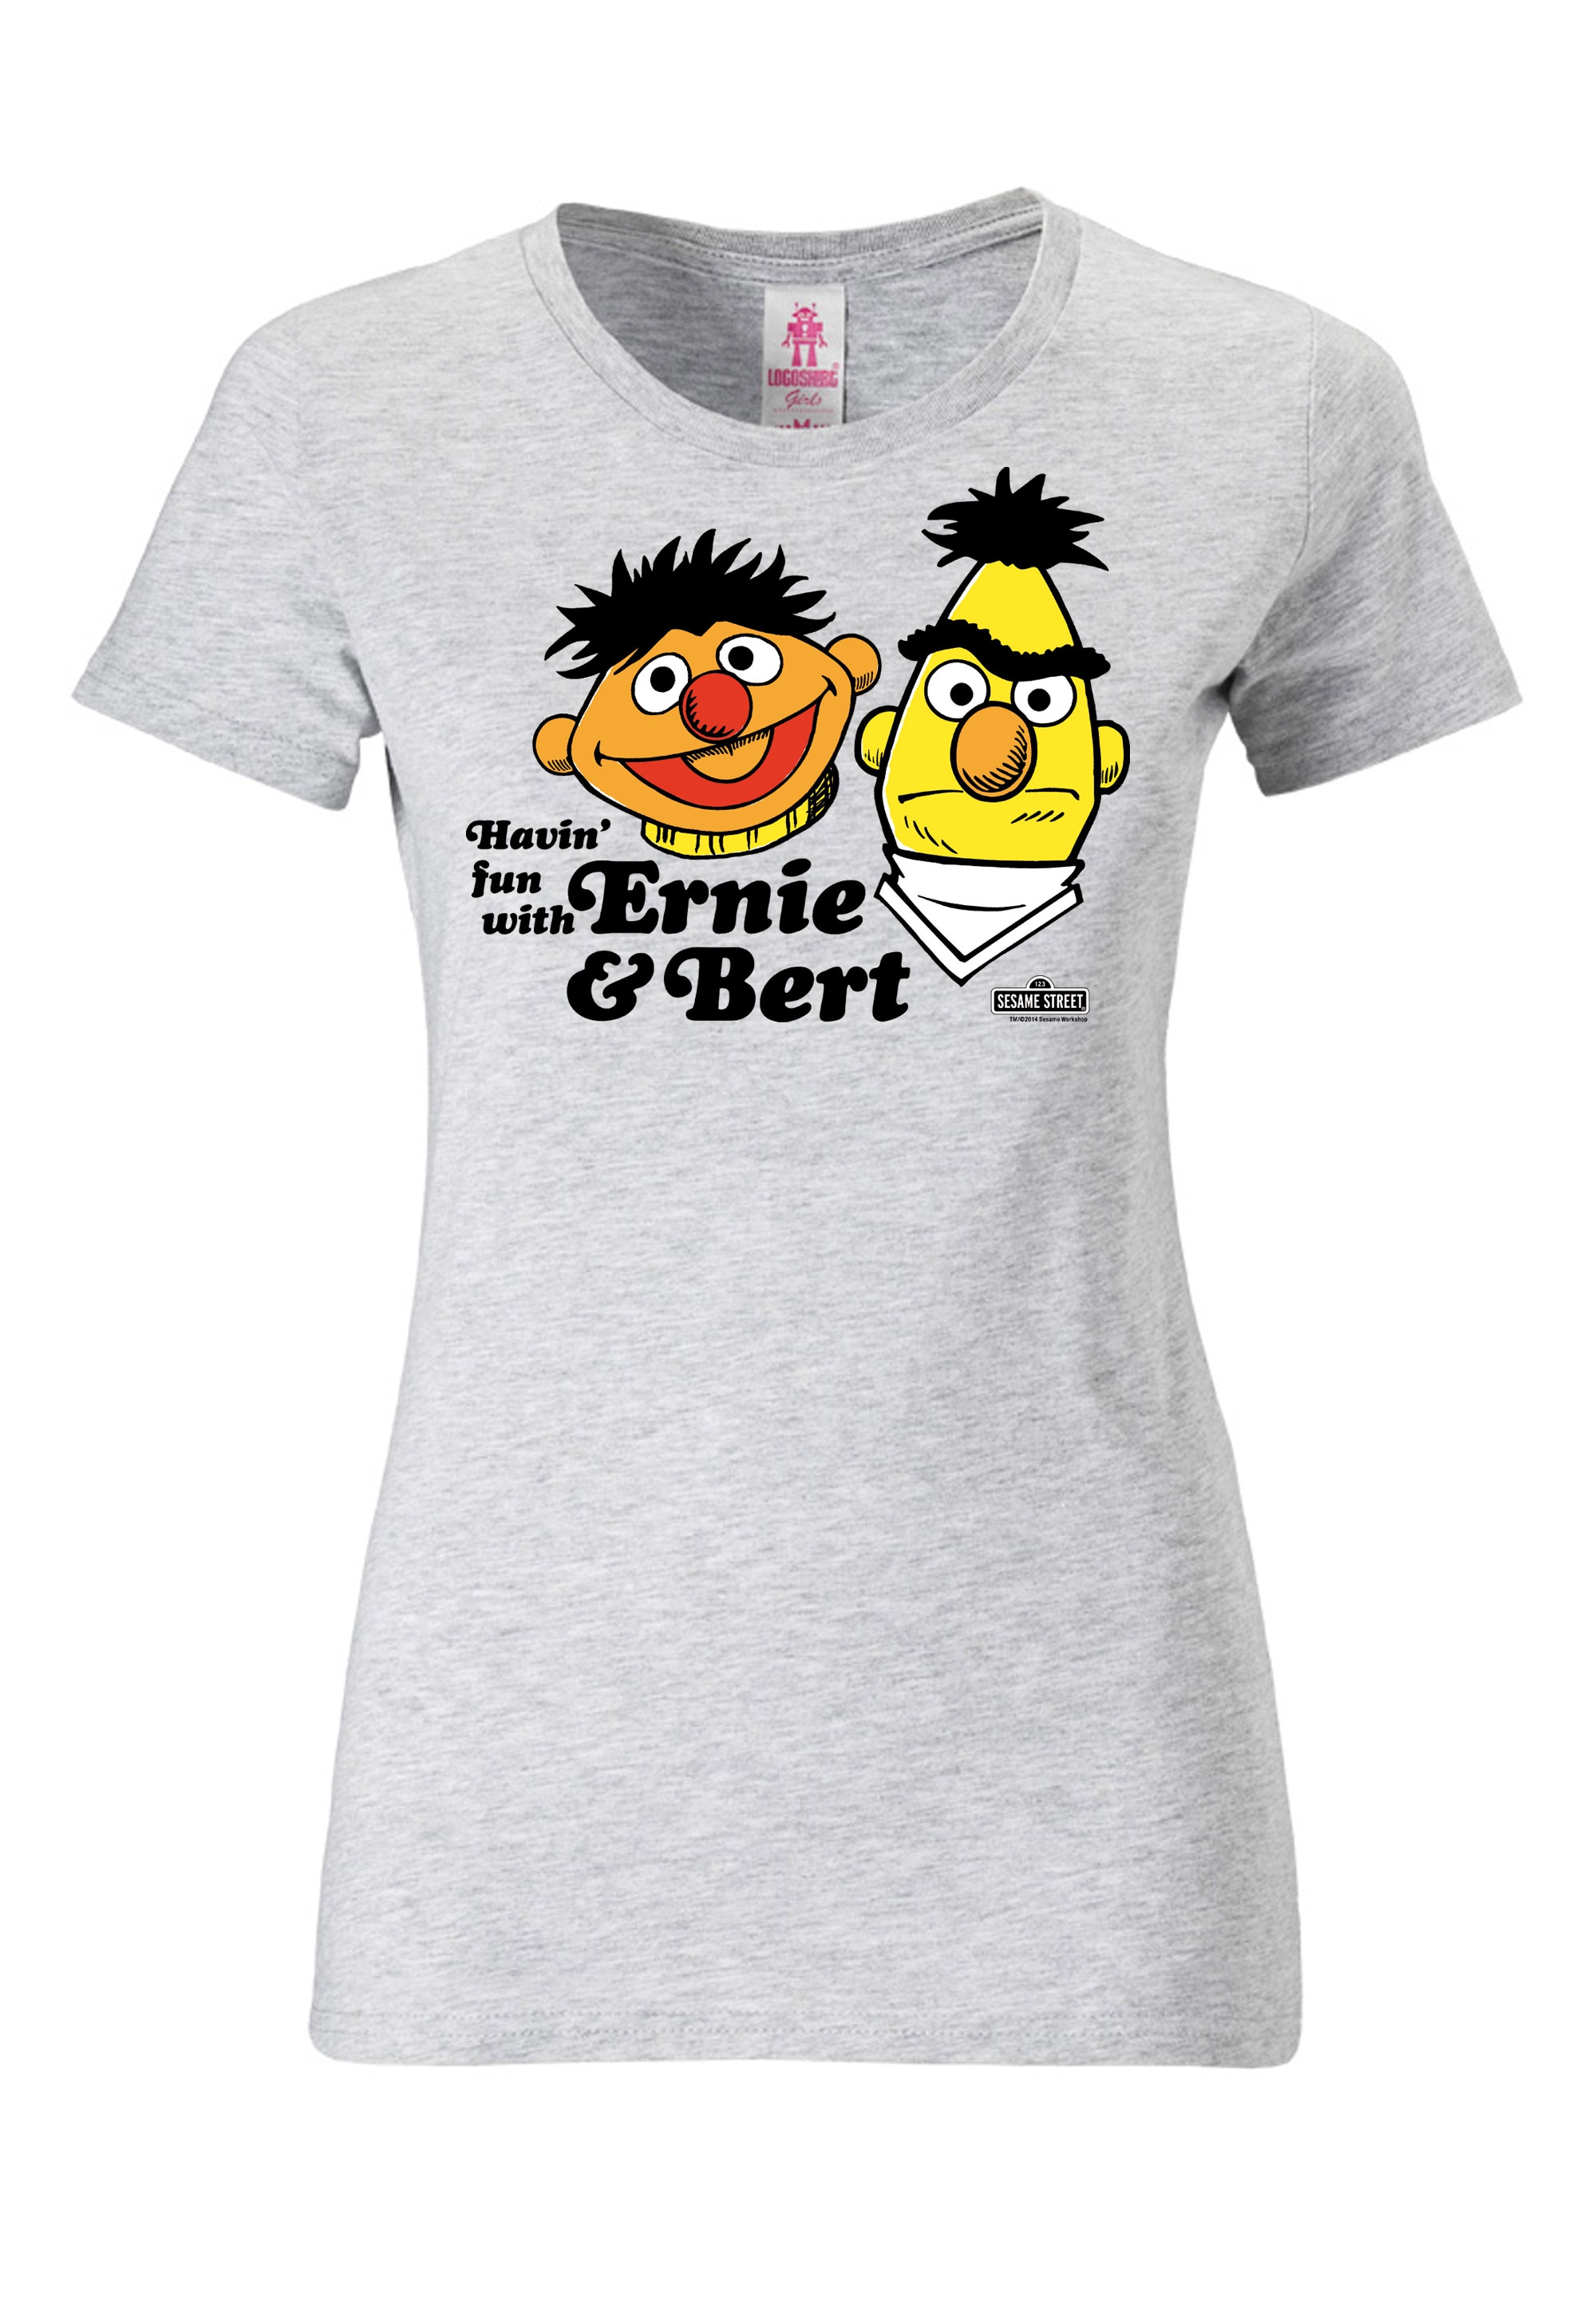 LOGOSHIRT T-Shirt »Sesamstraße - Bert-Print mit Ernie & Fun«, und Bert Ernie kaufen